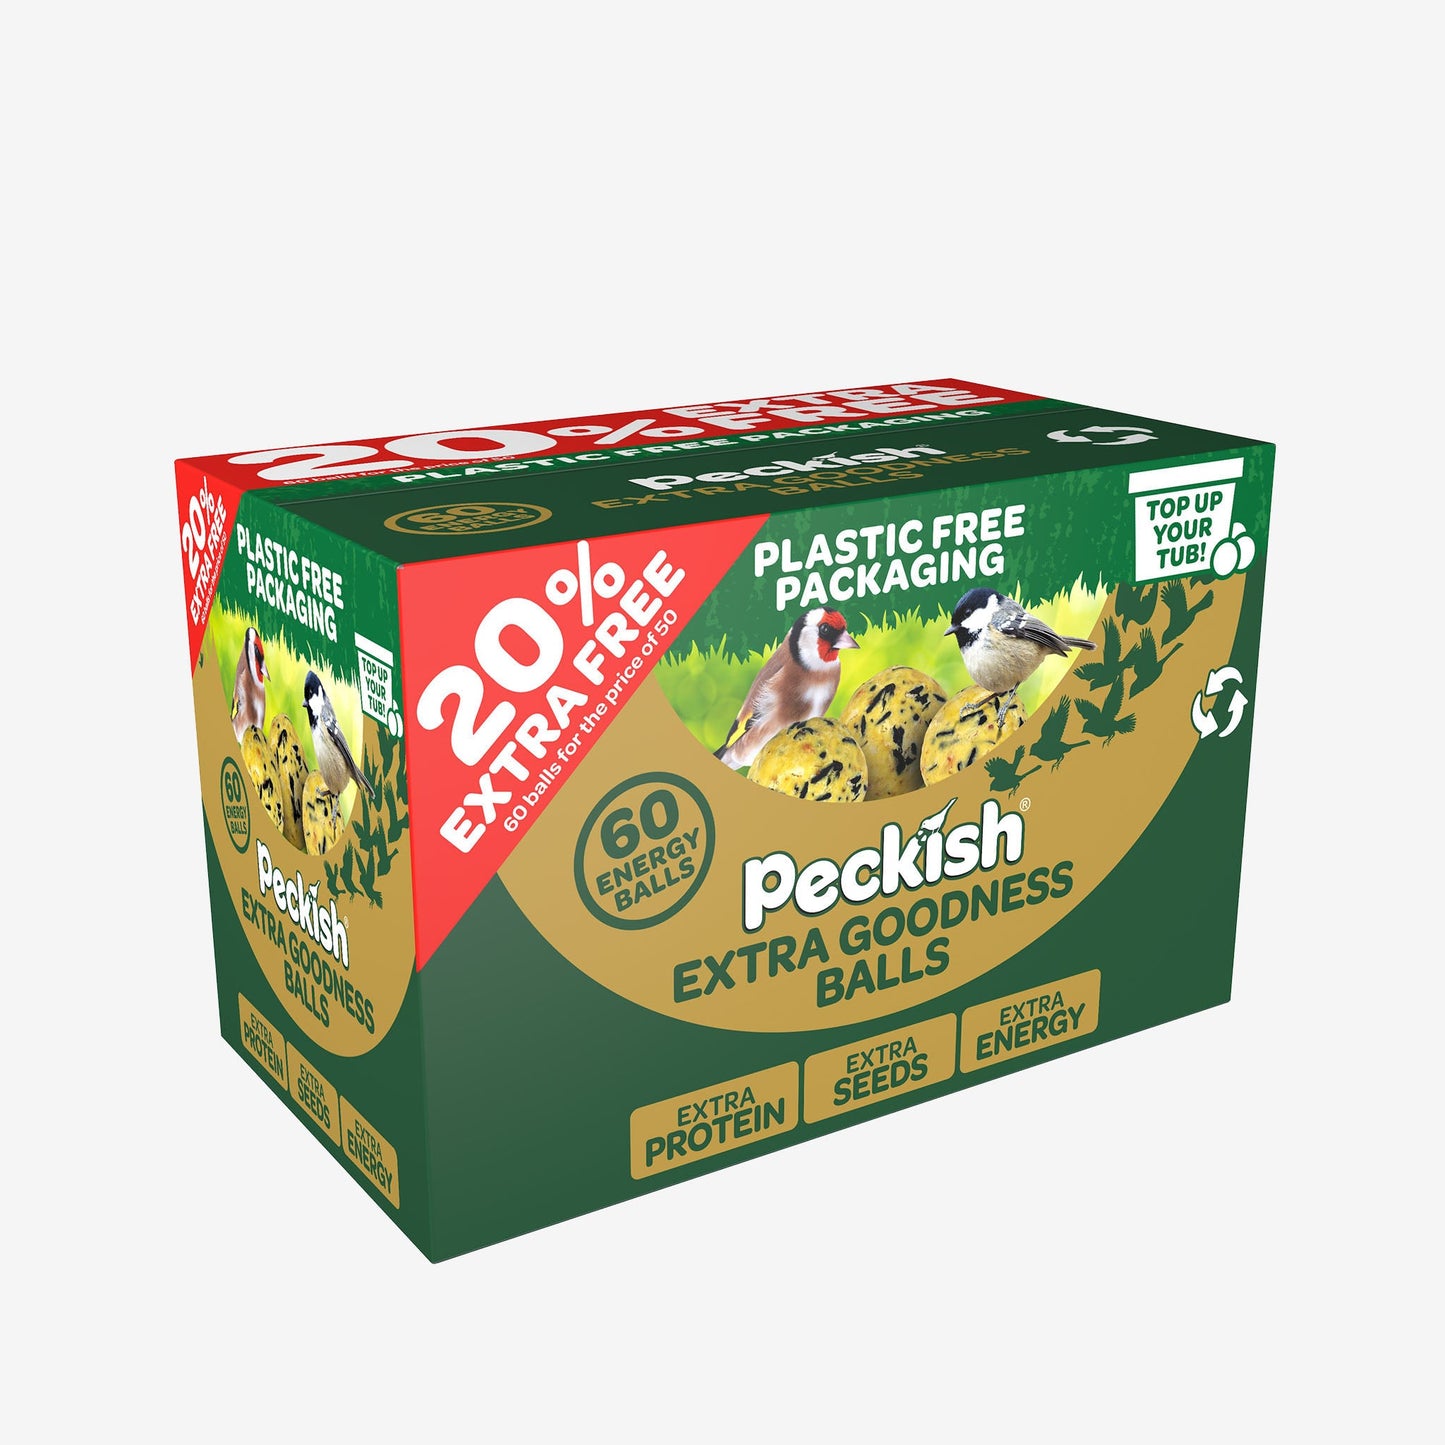 Peckish Extra Goodness Energy Balls 50 Box Plus 20% Extra Free